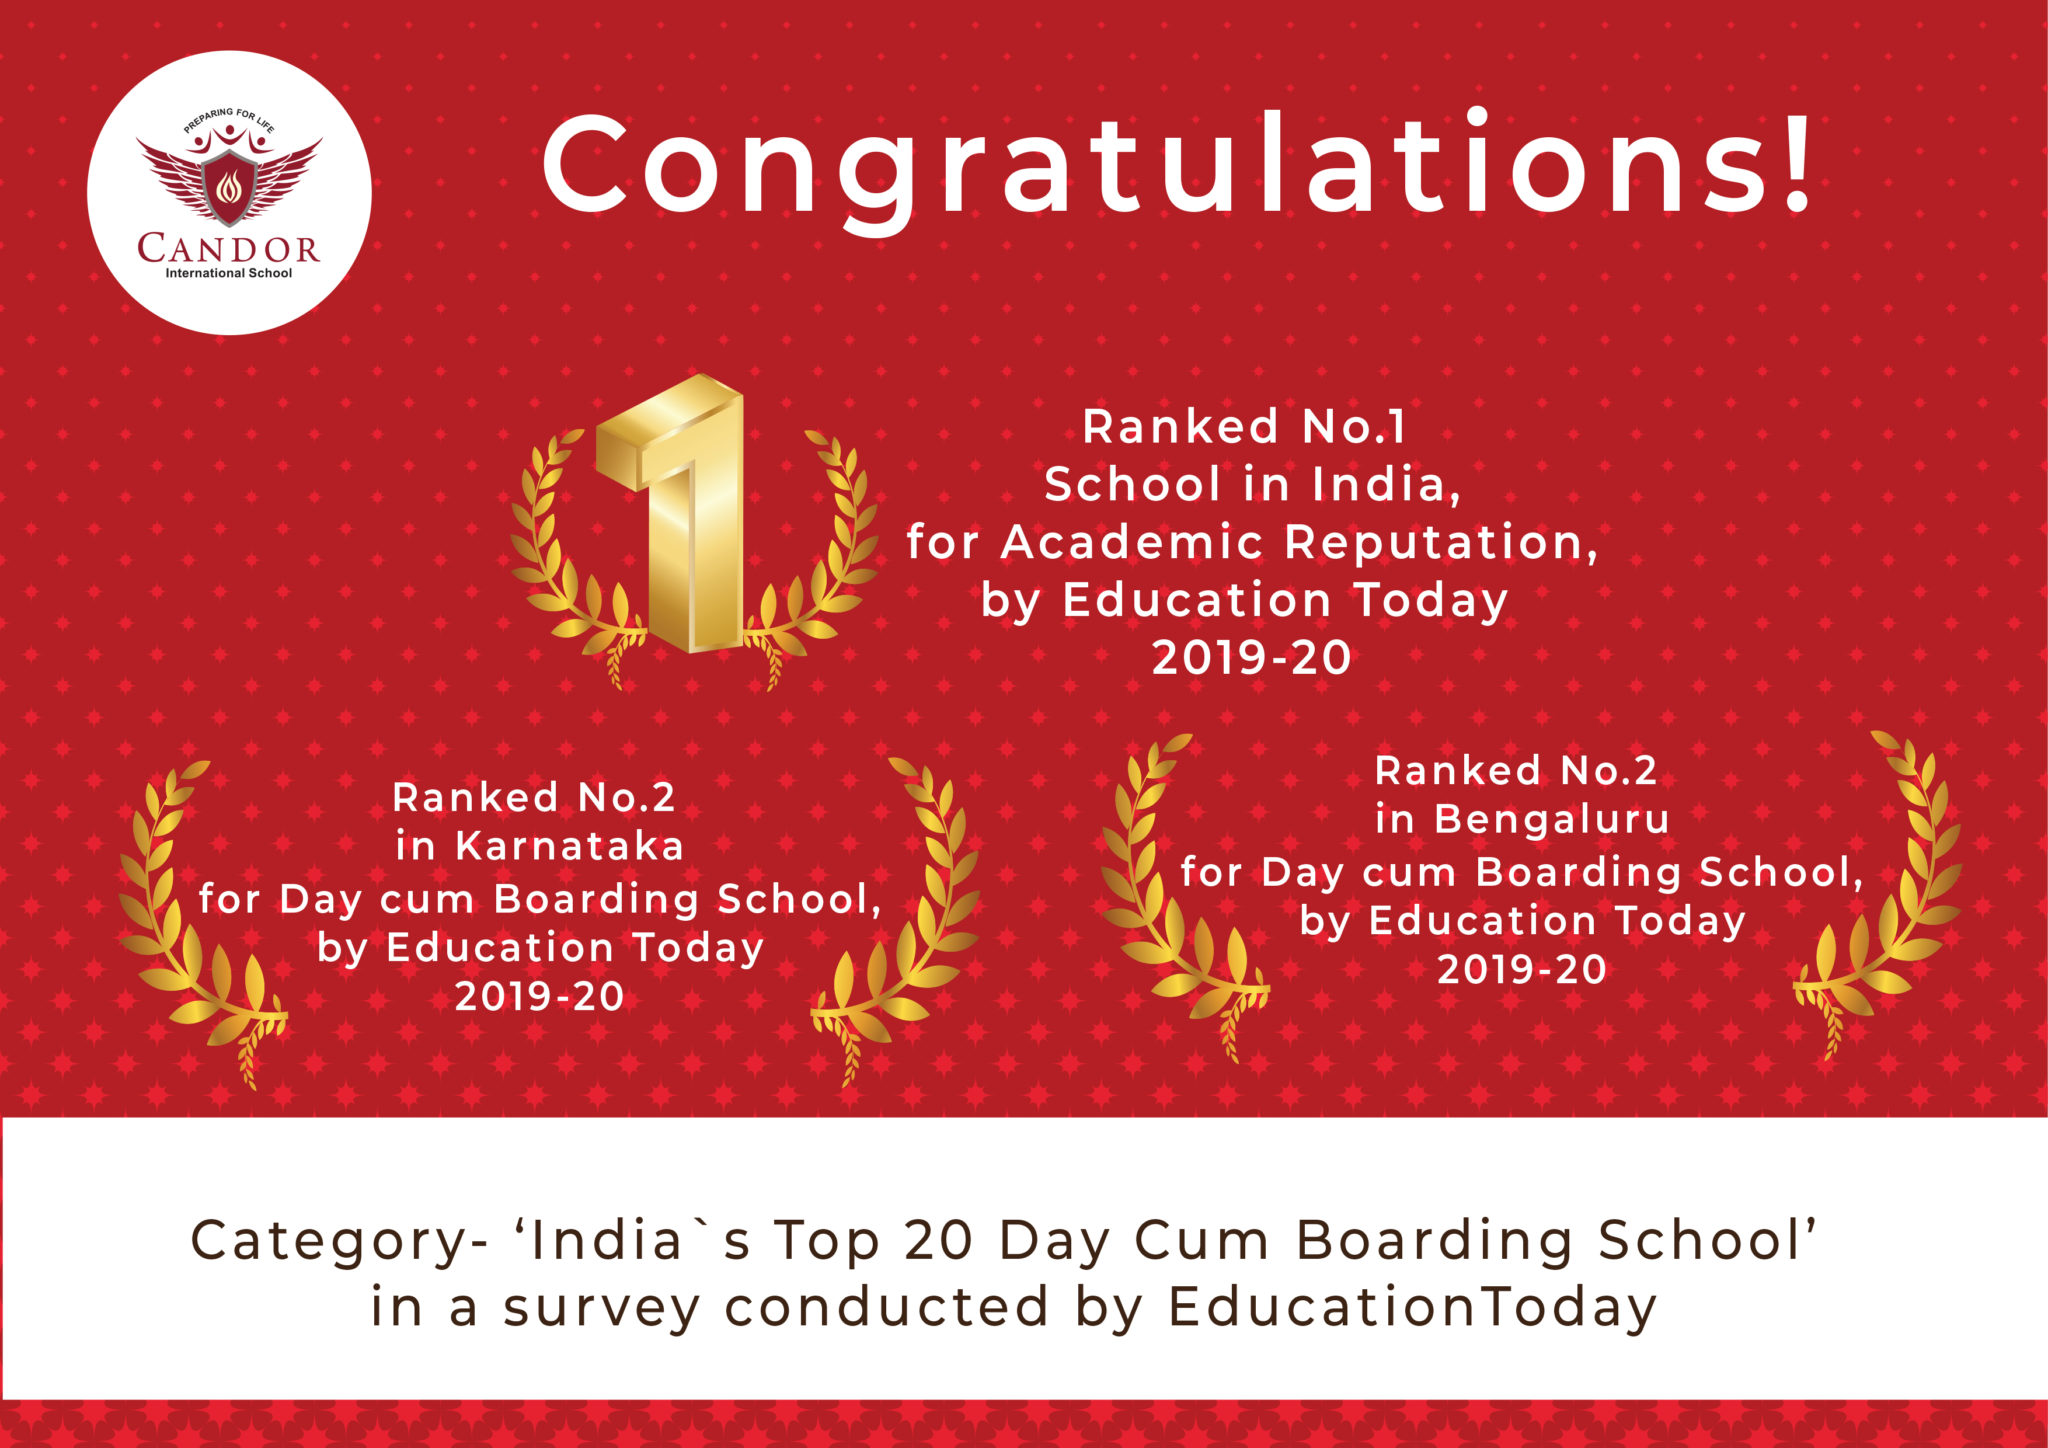 Candor India's Number 1 School